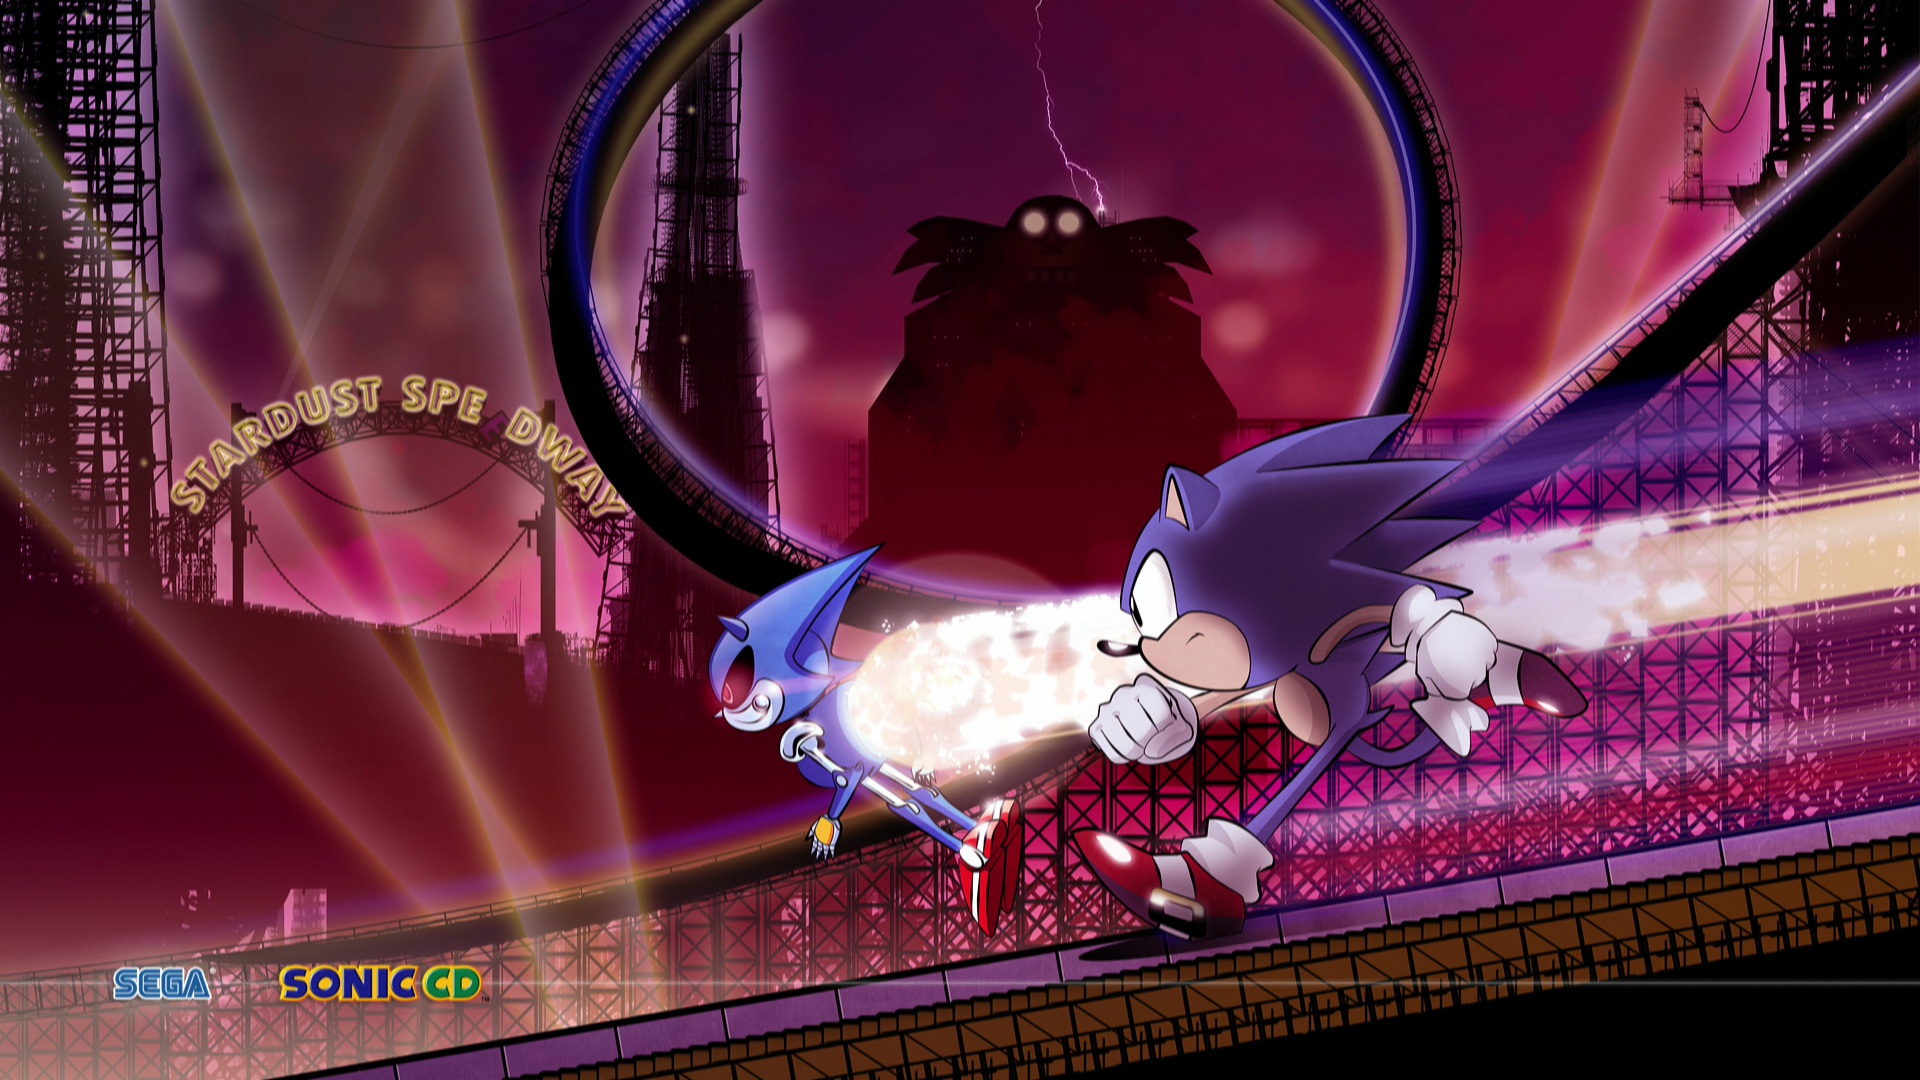 fondo de pantalla de sonic cd,púrpura,cg artwork,personaje de ficción,captura de pantalla,juegos